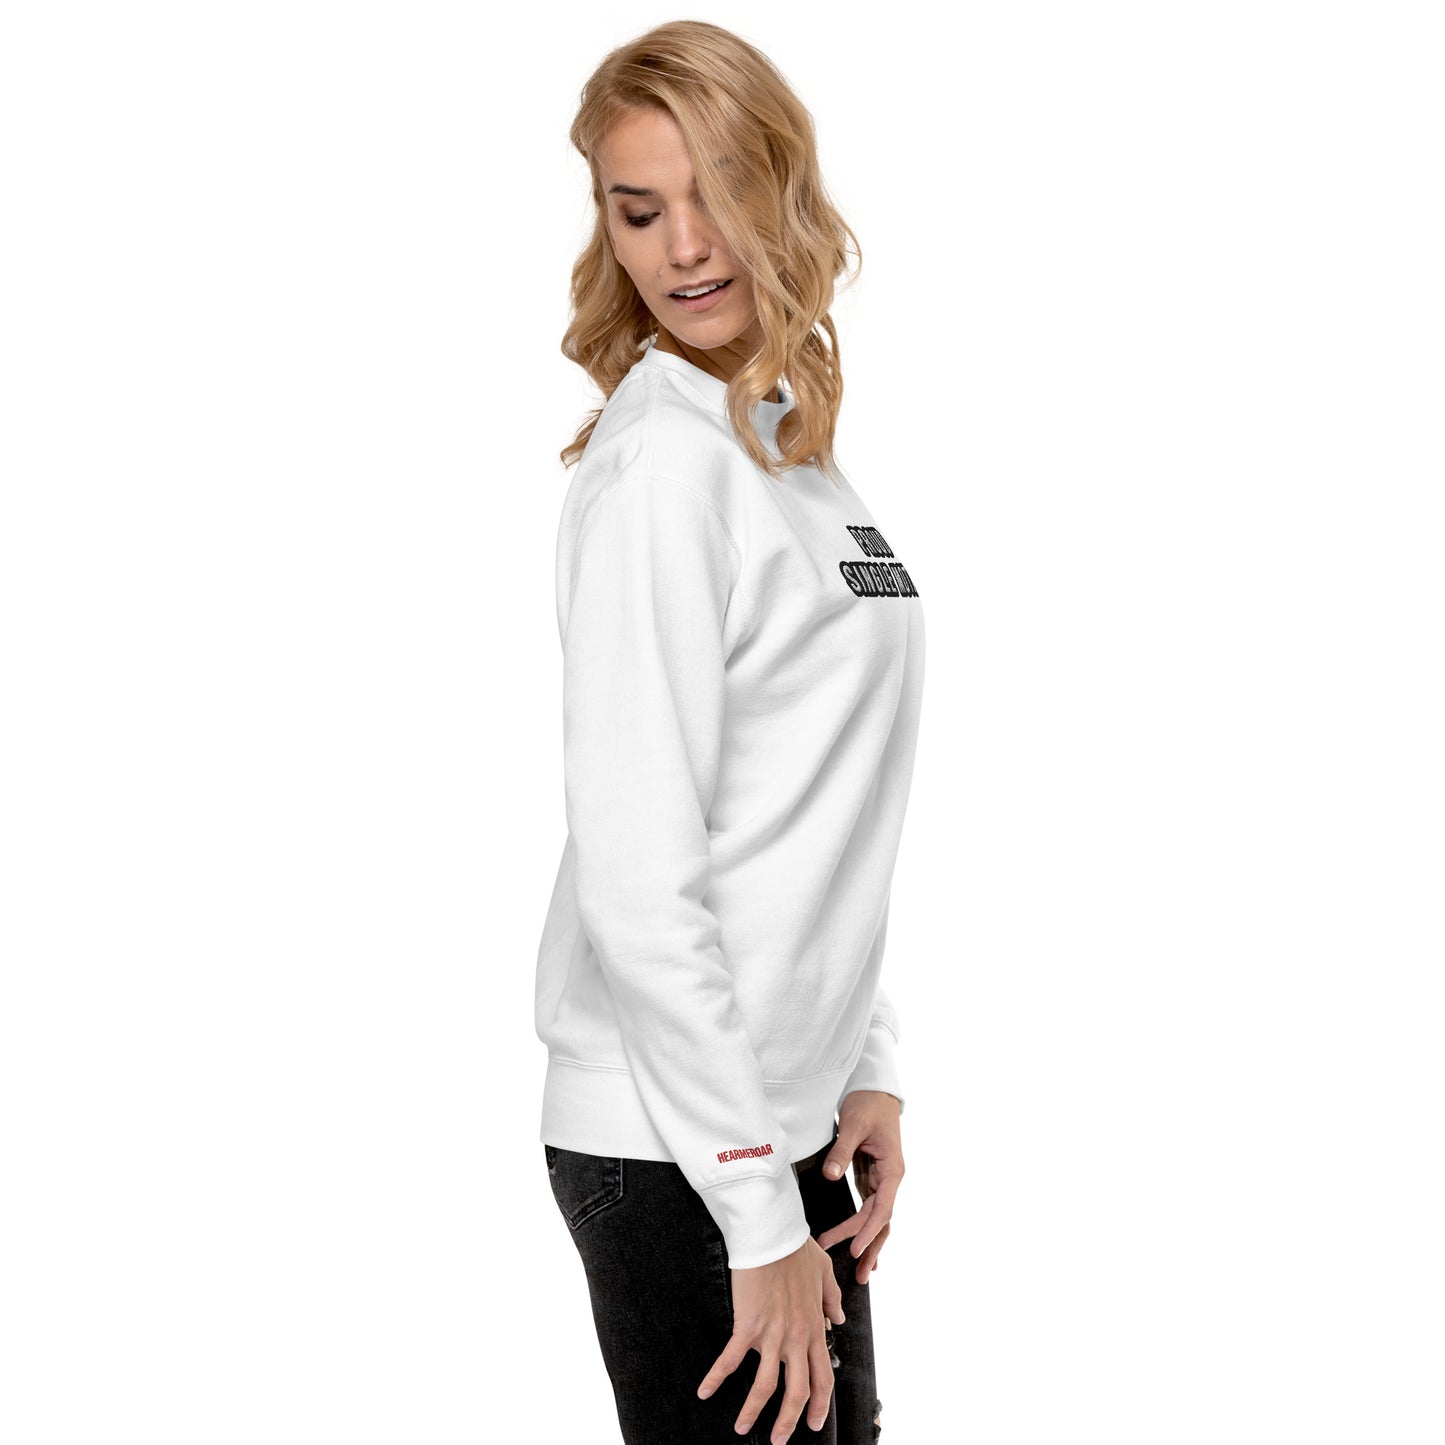 Proud Single Mother / Single Mother's Club Embroidered Unisex Sweatshirt